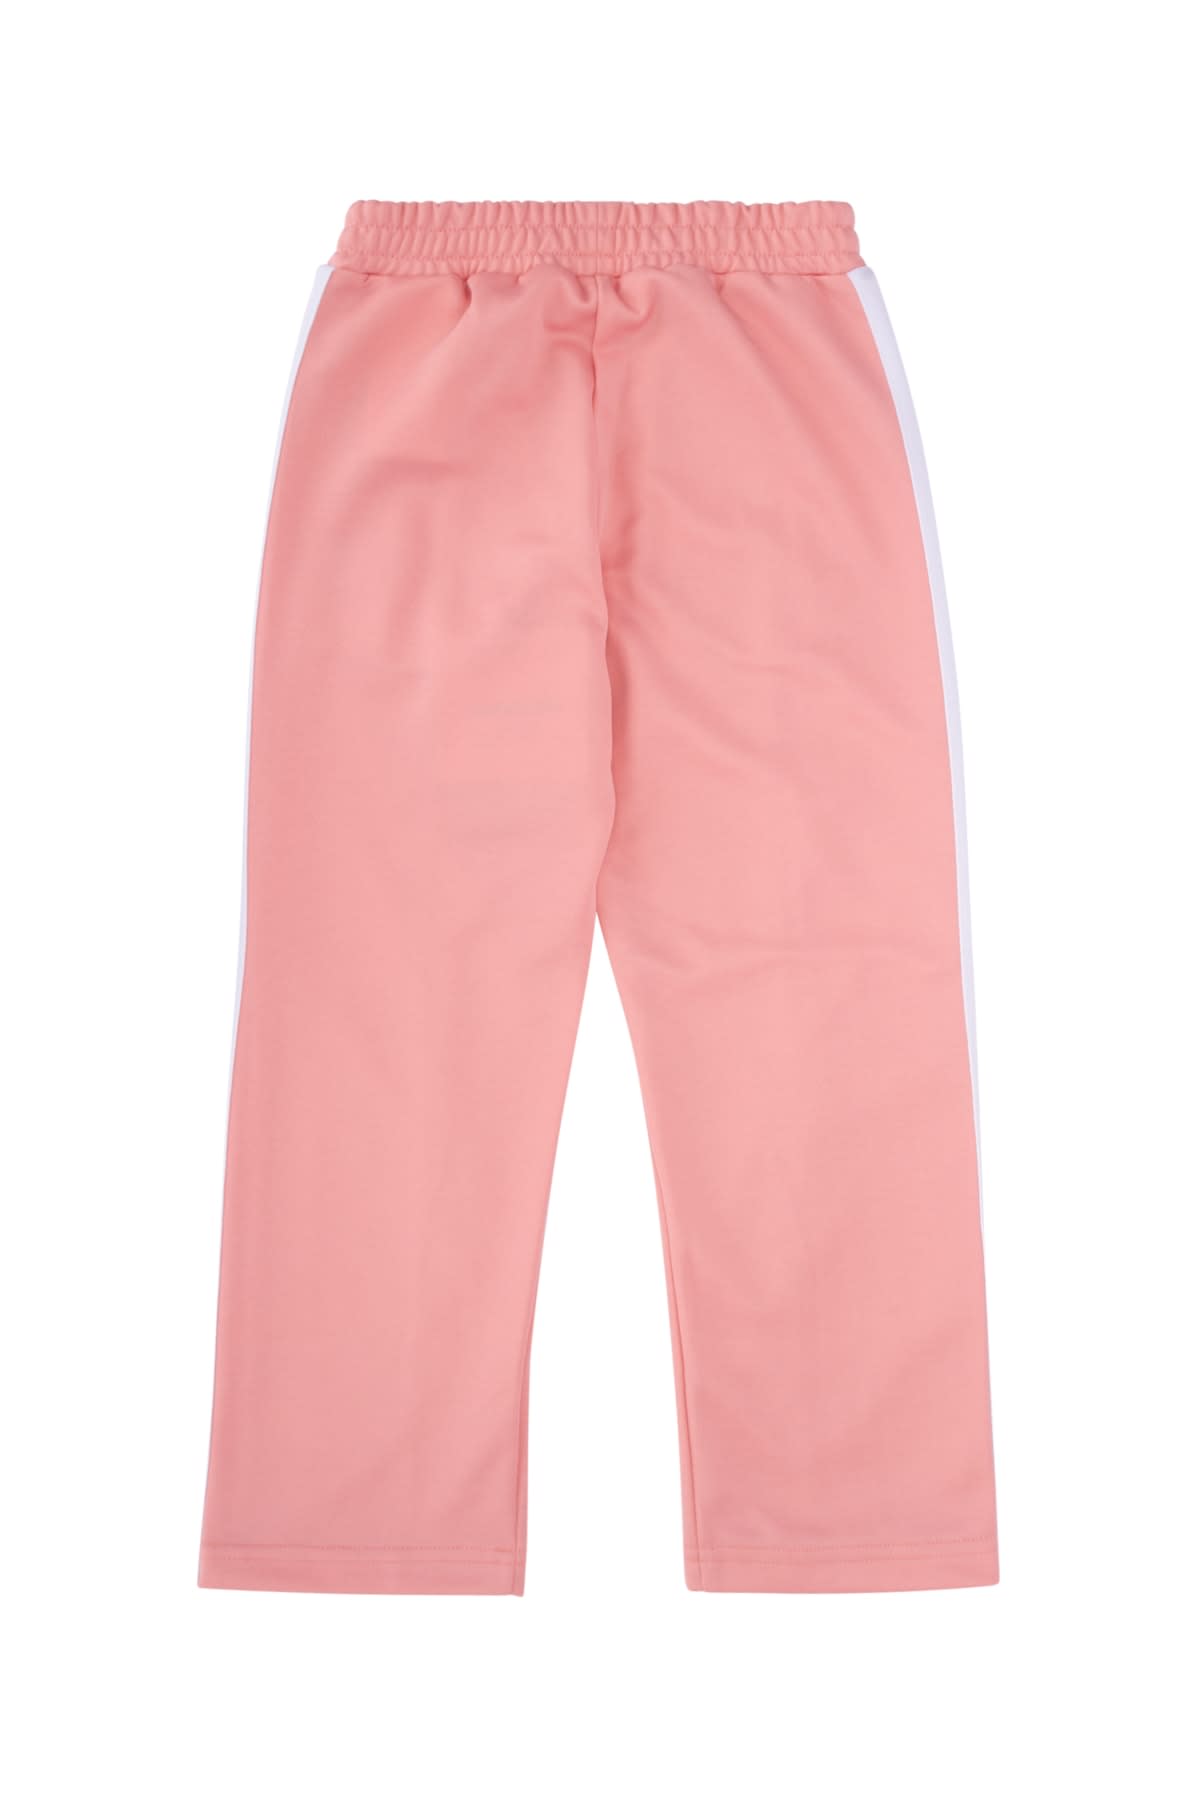 Palm Angels Kids' Pantalone In Pinkwhite